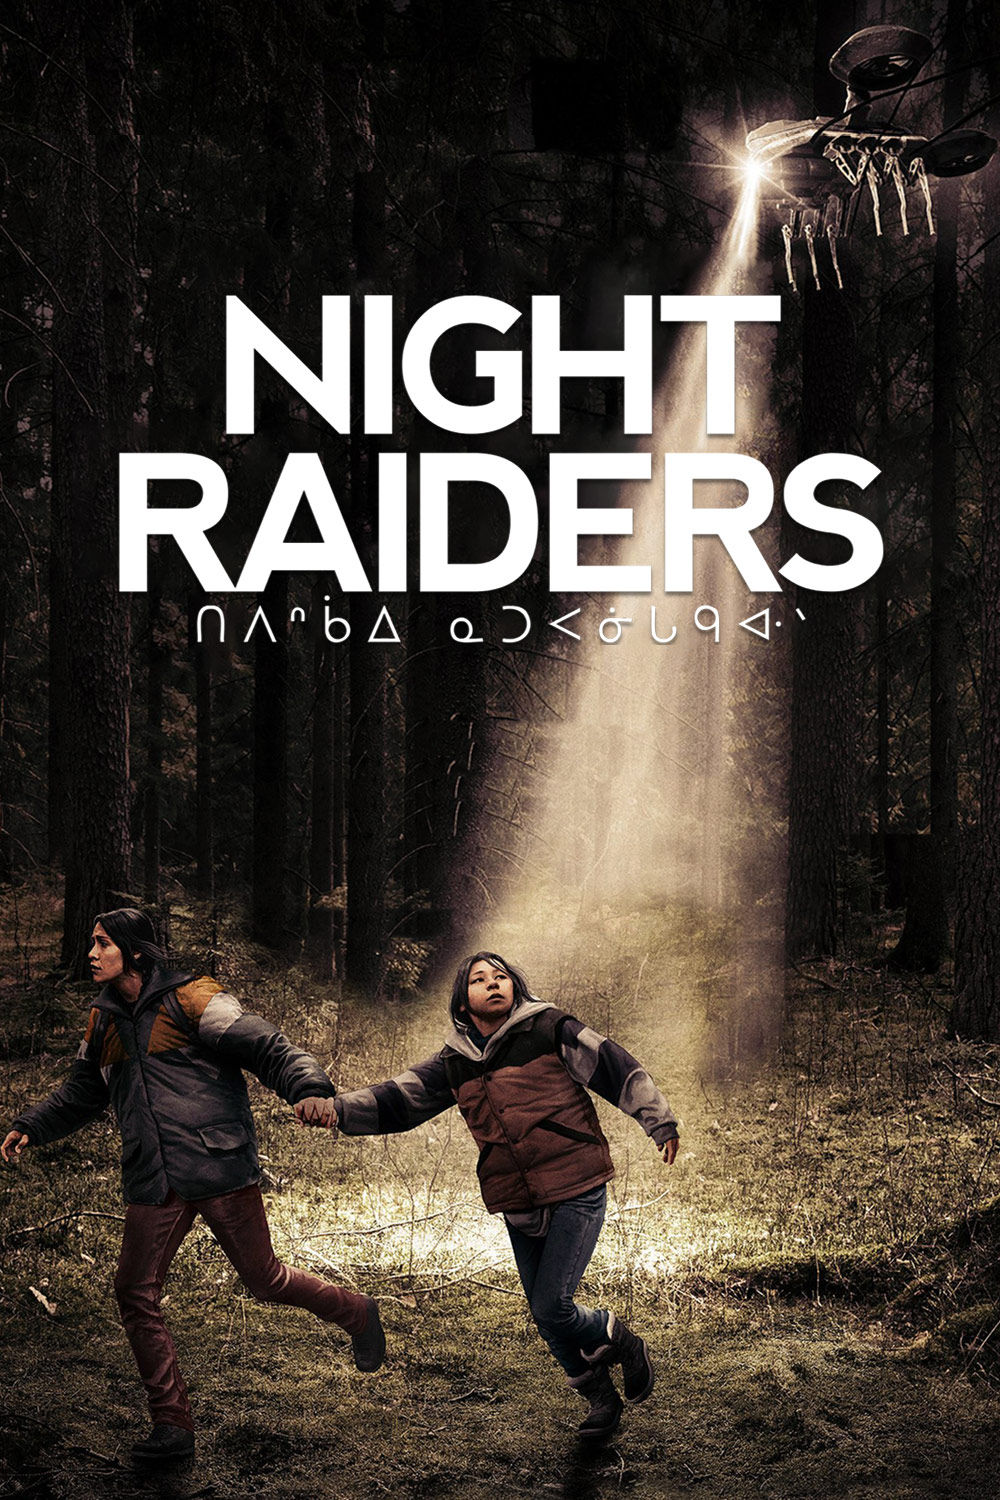 Watch Night Raiders Online